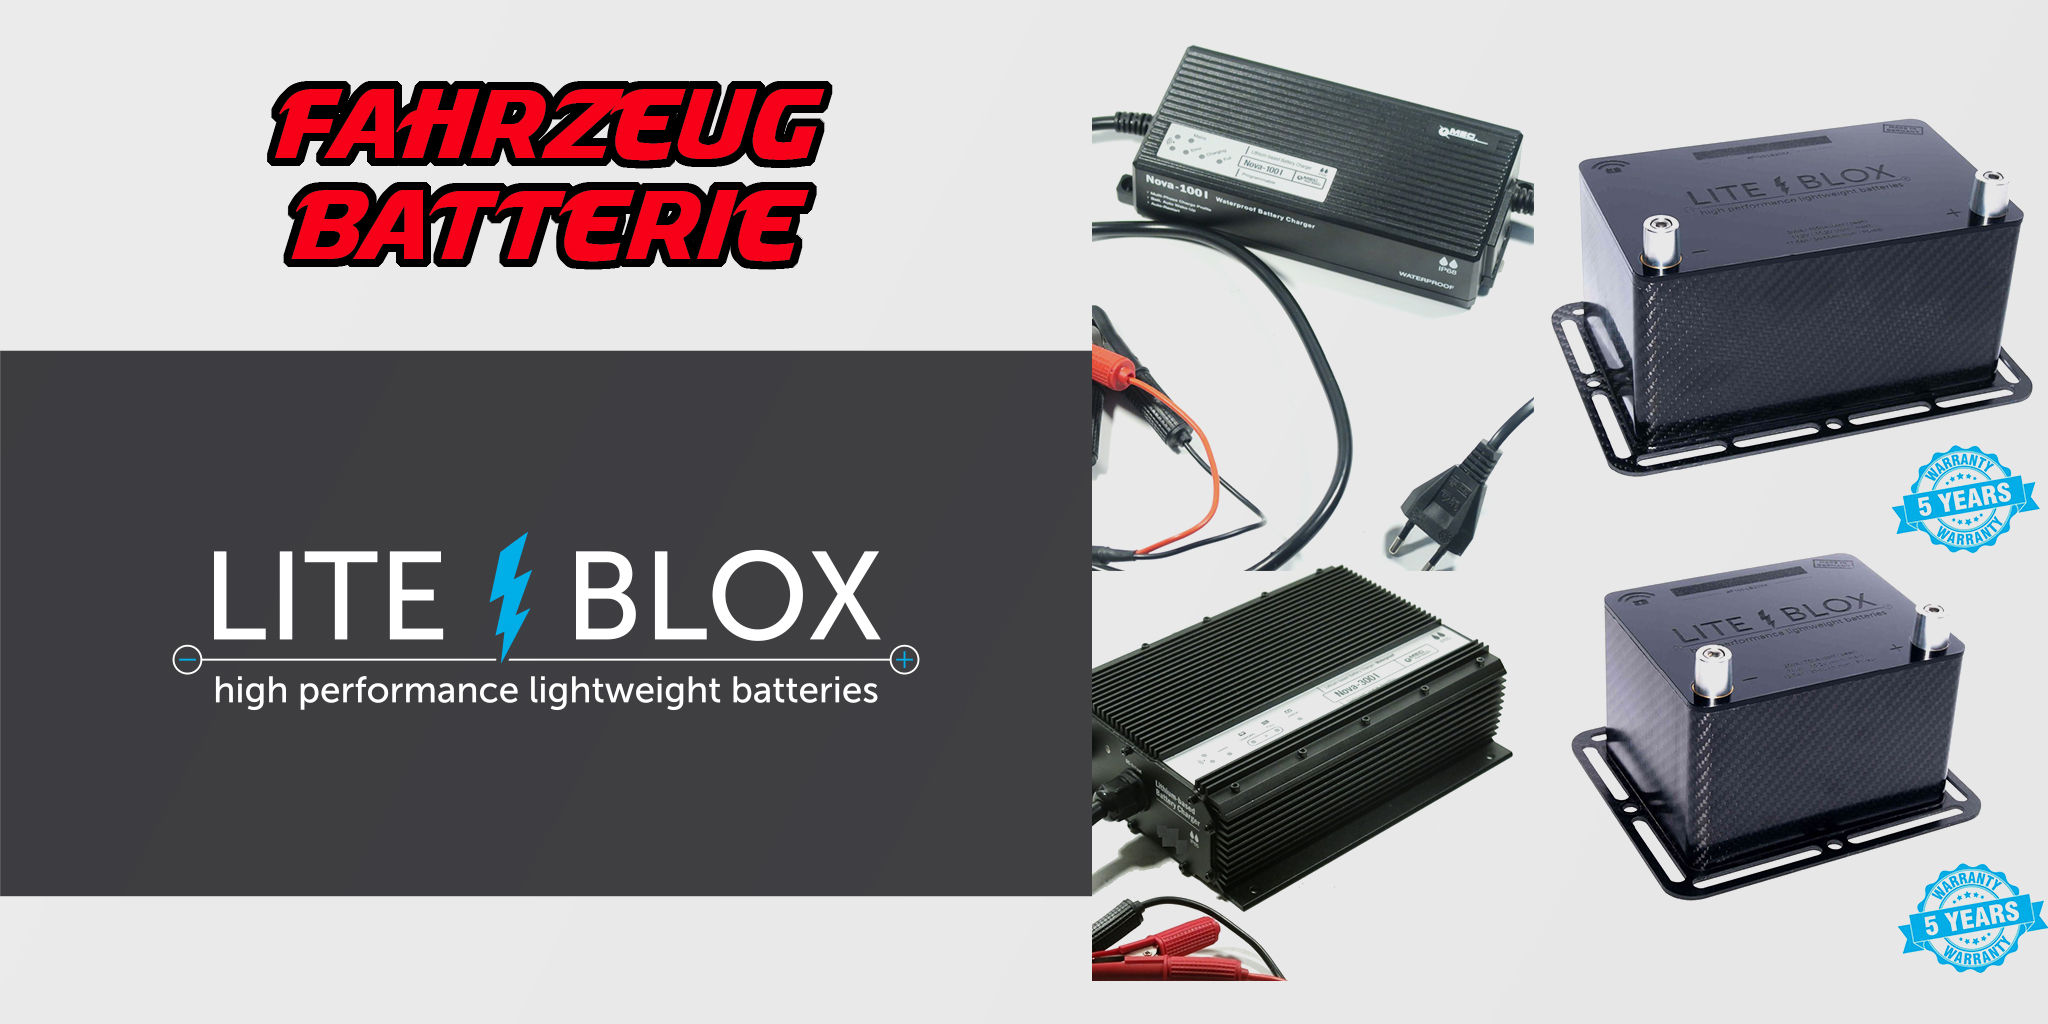 LiteBlox Batterie